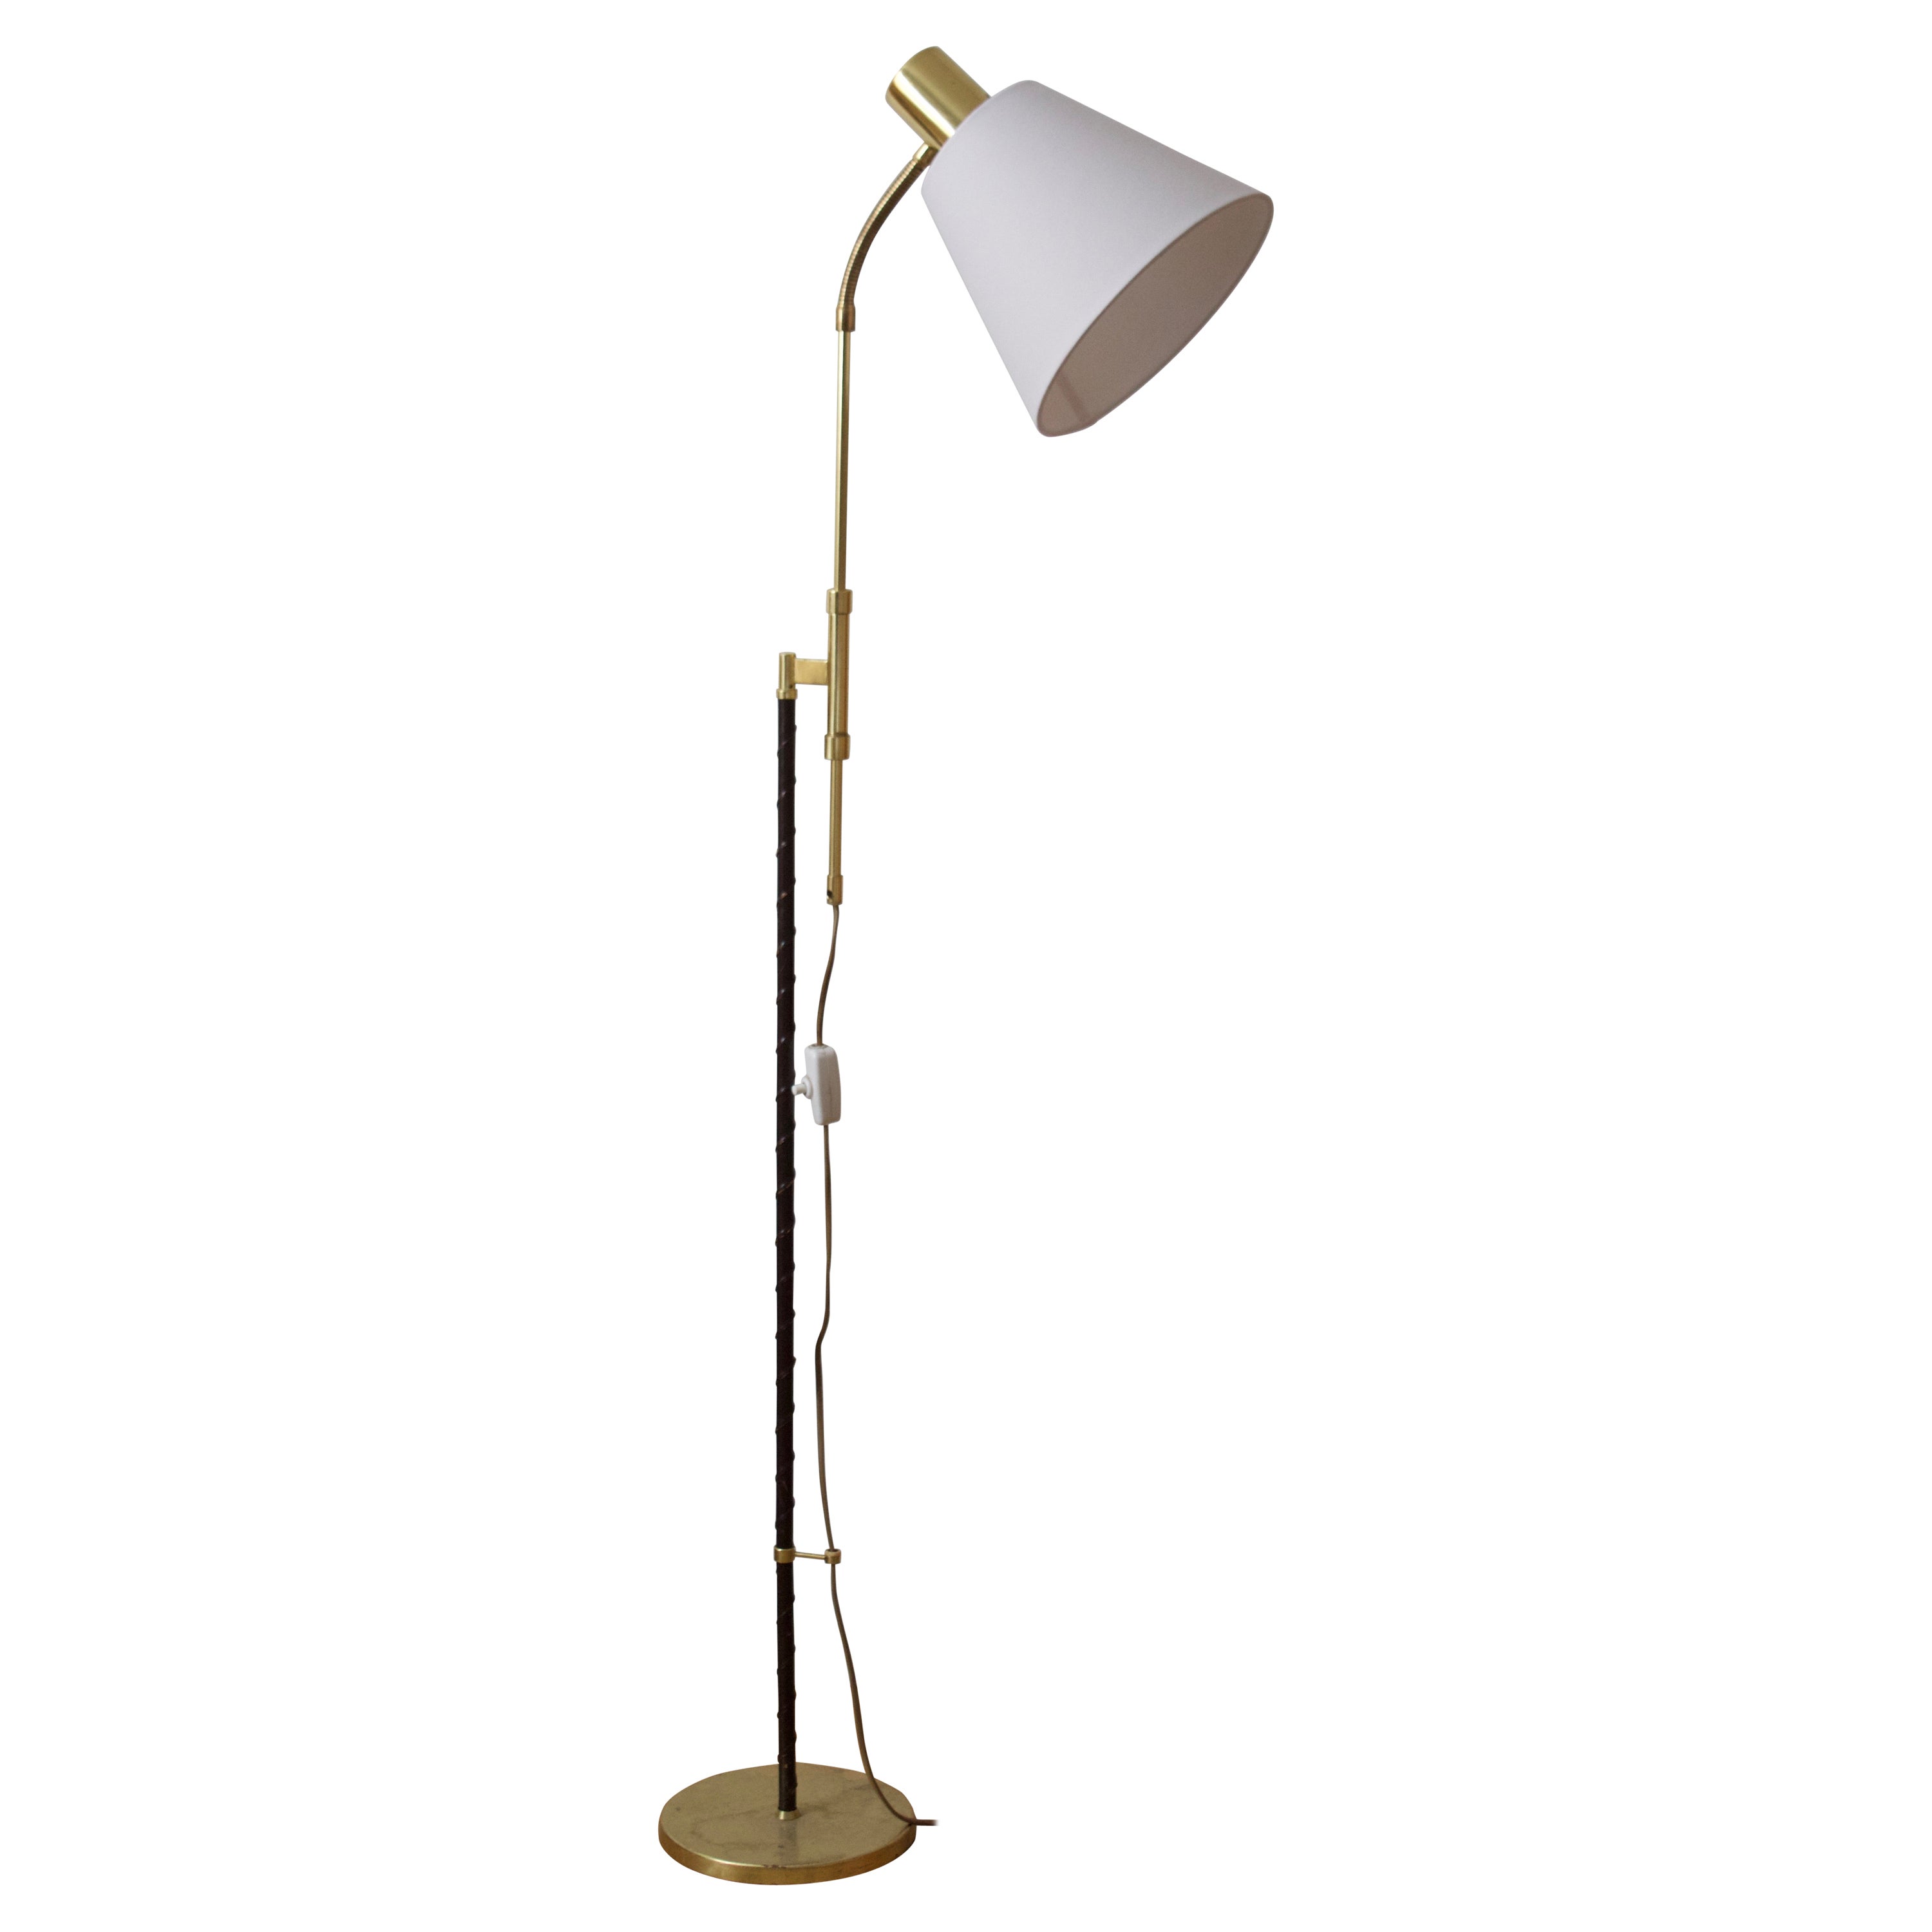 Falkenberg Belysning, Adjustable Floor Lamp, Brass, Leather, Fabric, 1950s